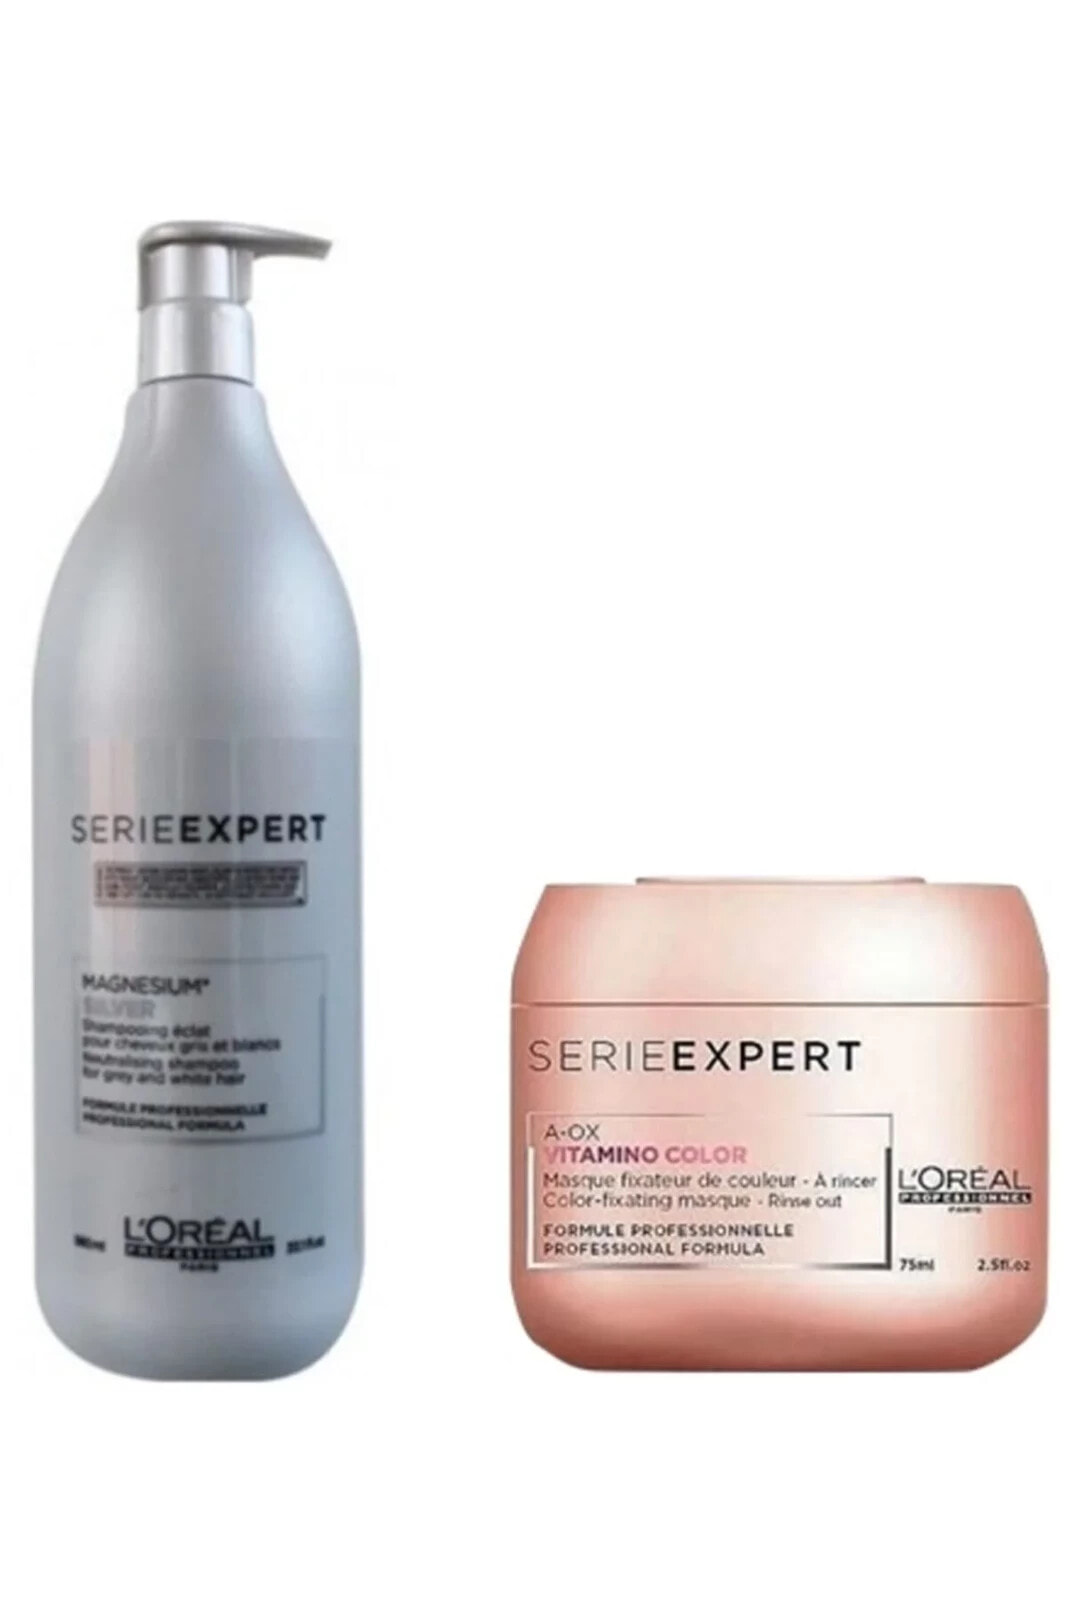 Serie Expert Silver Parlaklık Veren Şampuan 980 ml + A-Ox Vitamino Color Maske 75 ml 7777777177021